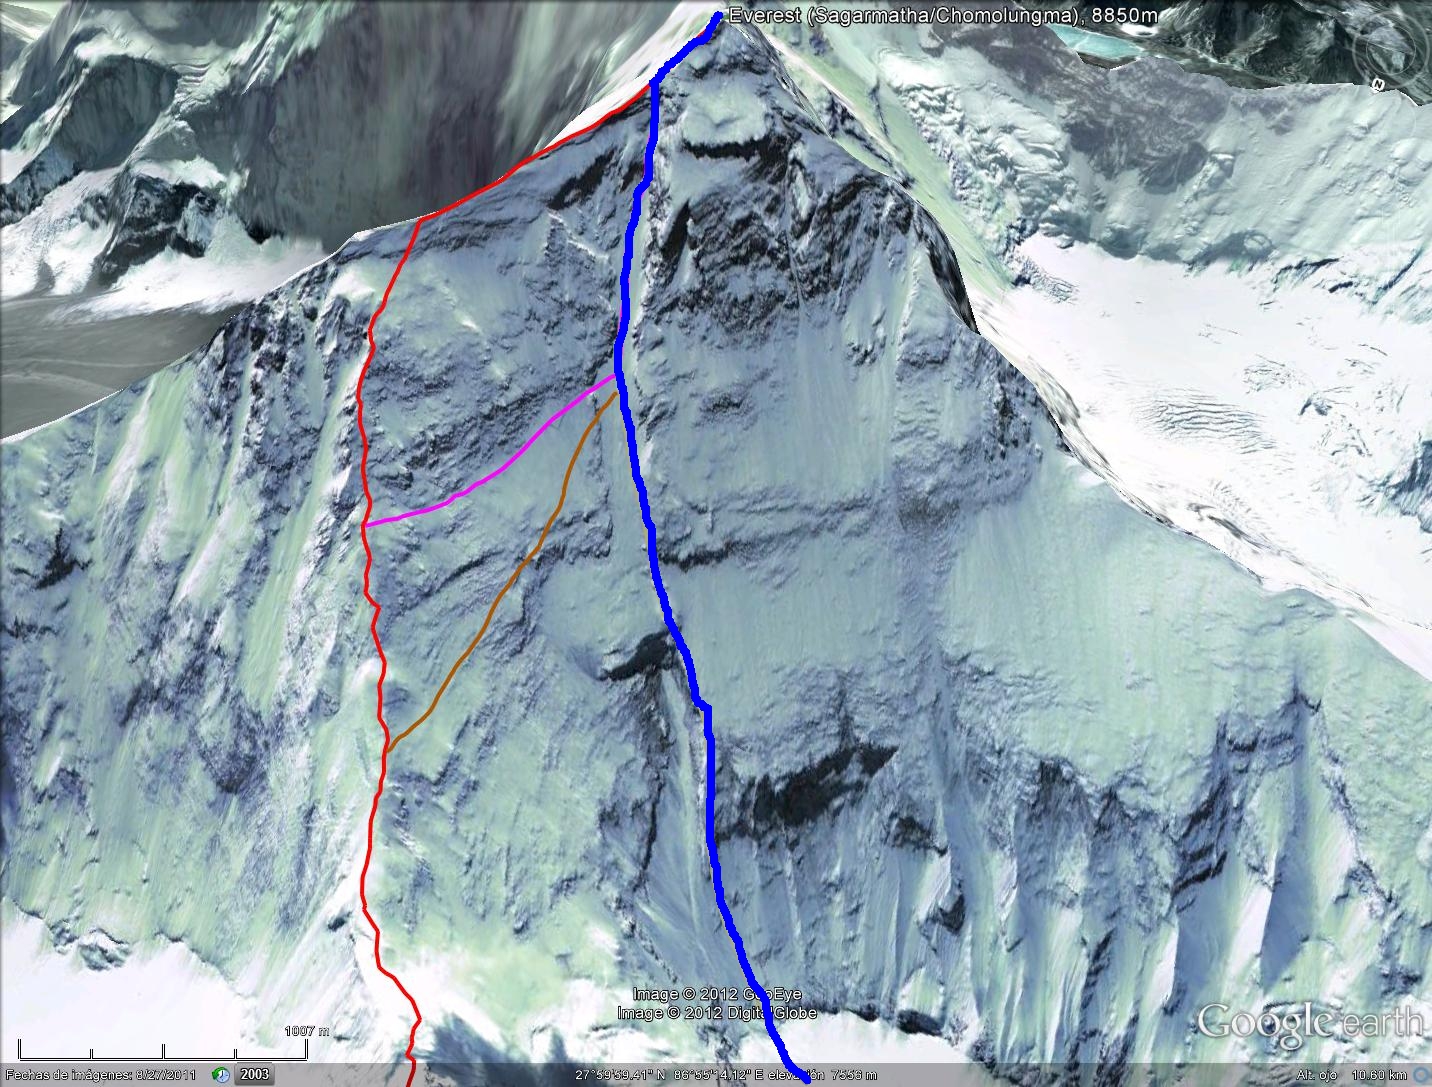 маршрут "White Limbo" по Северному кулуару (северная стена – кулуар Нортона) отмечен синим цветом